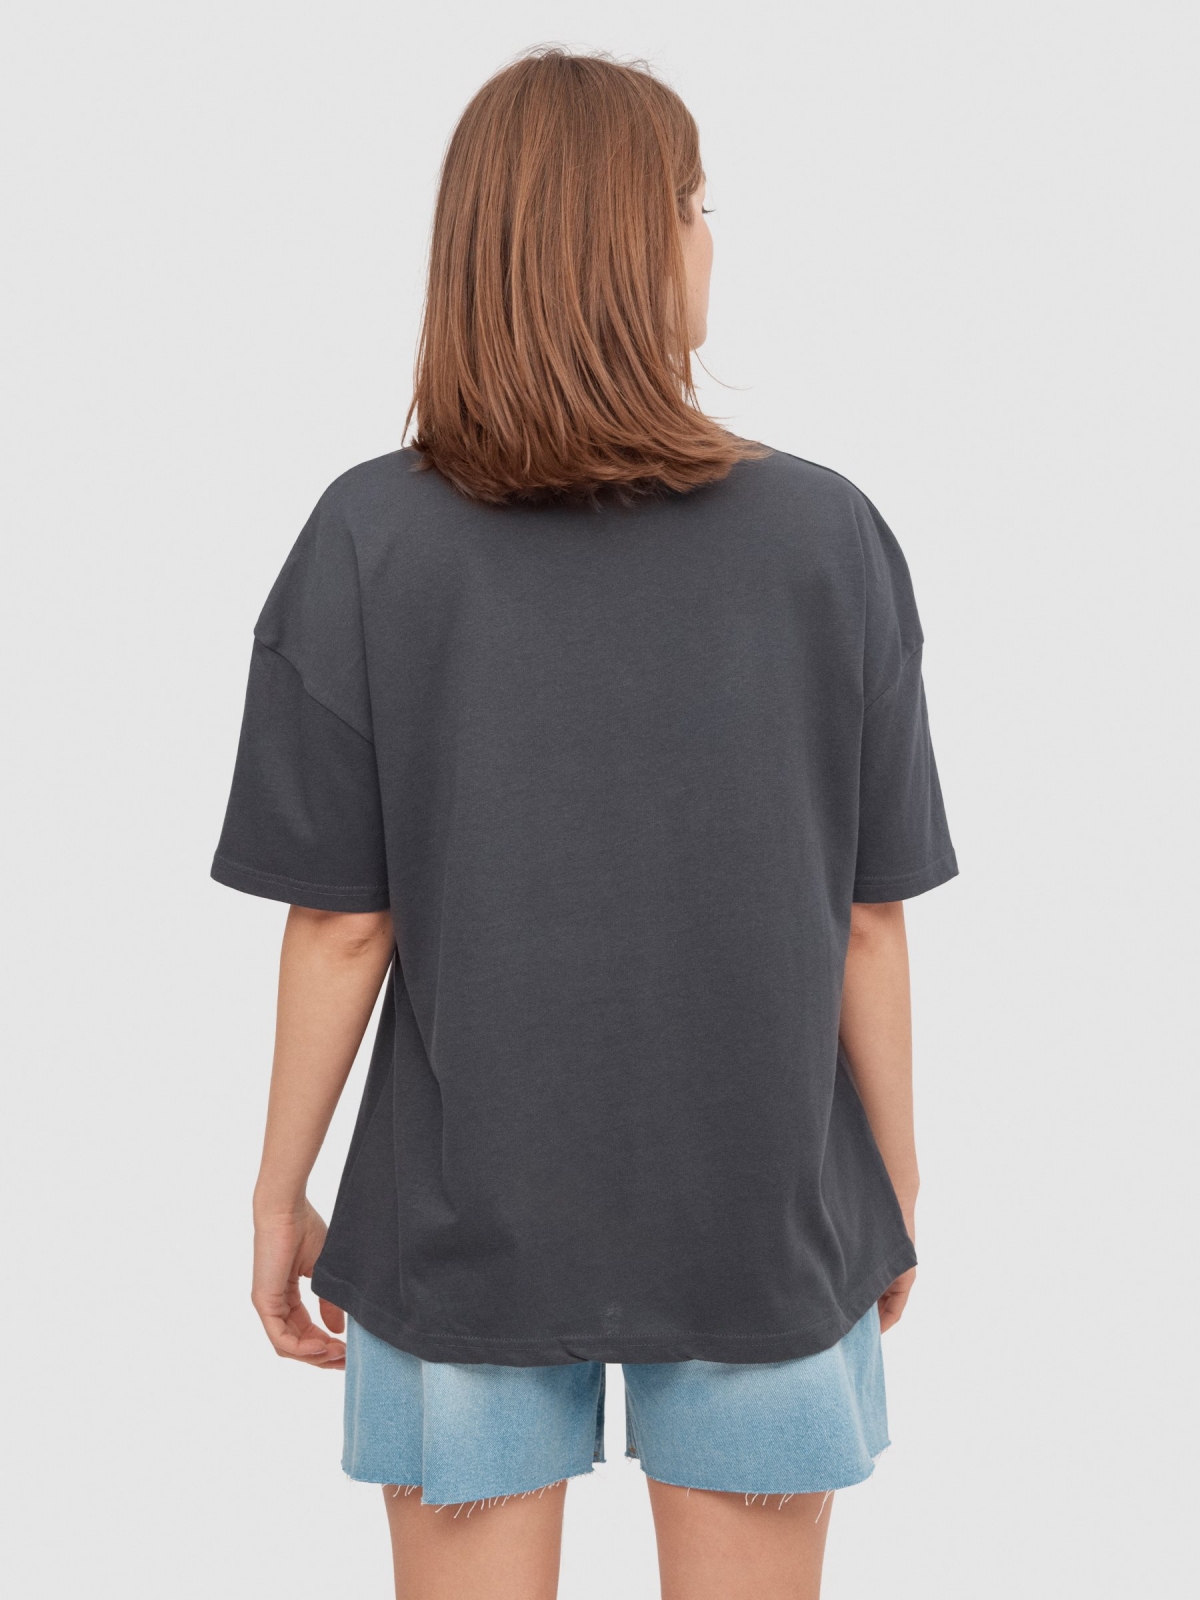 Stranger Things oversize t-shirt dark grey middle back view